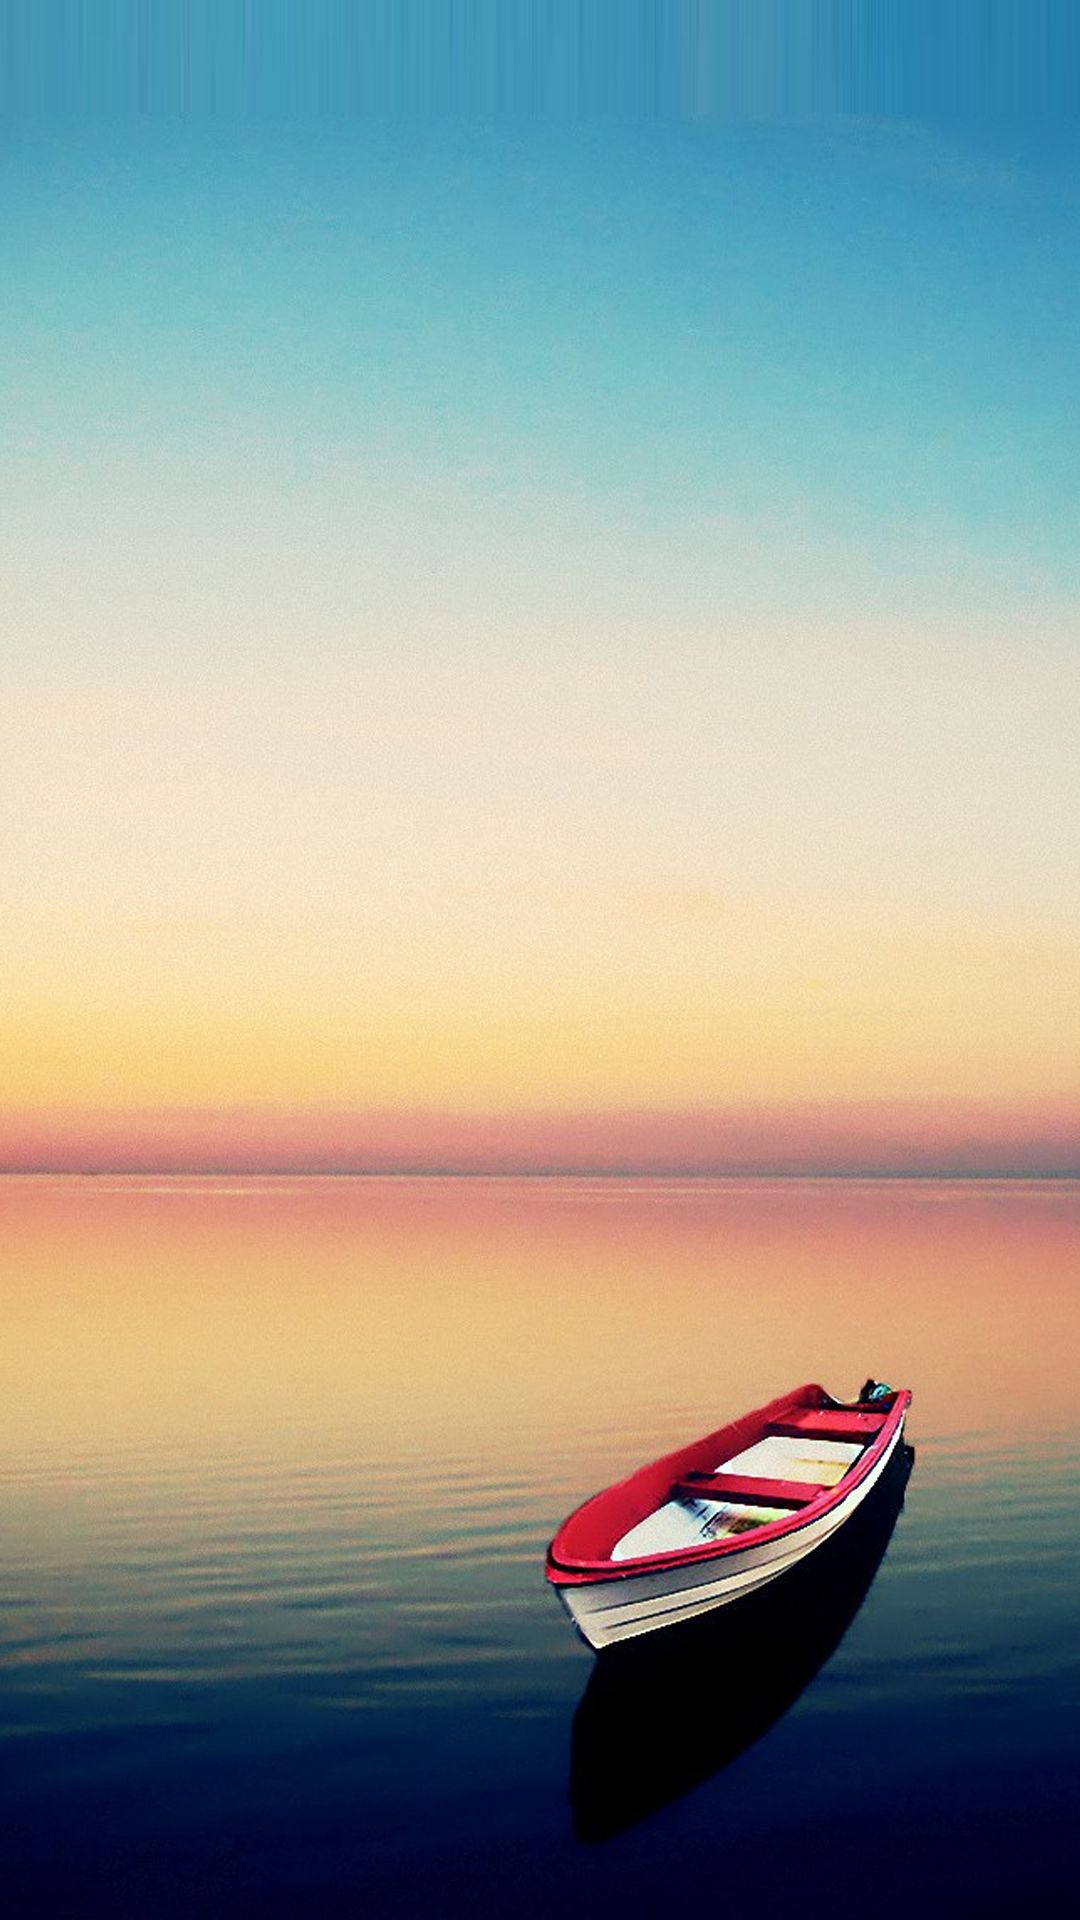 Boat at Sunset Smartphone HD Wallpaper ⋆ GetPhotos